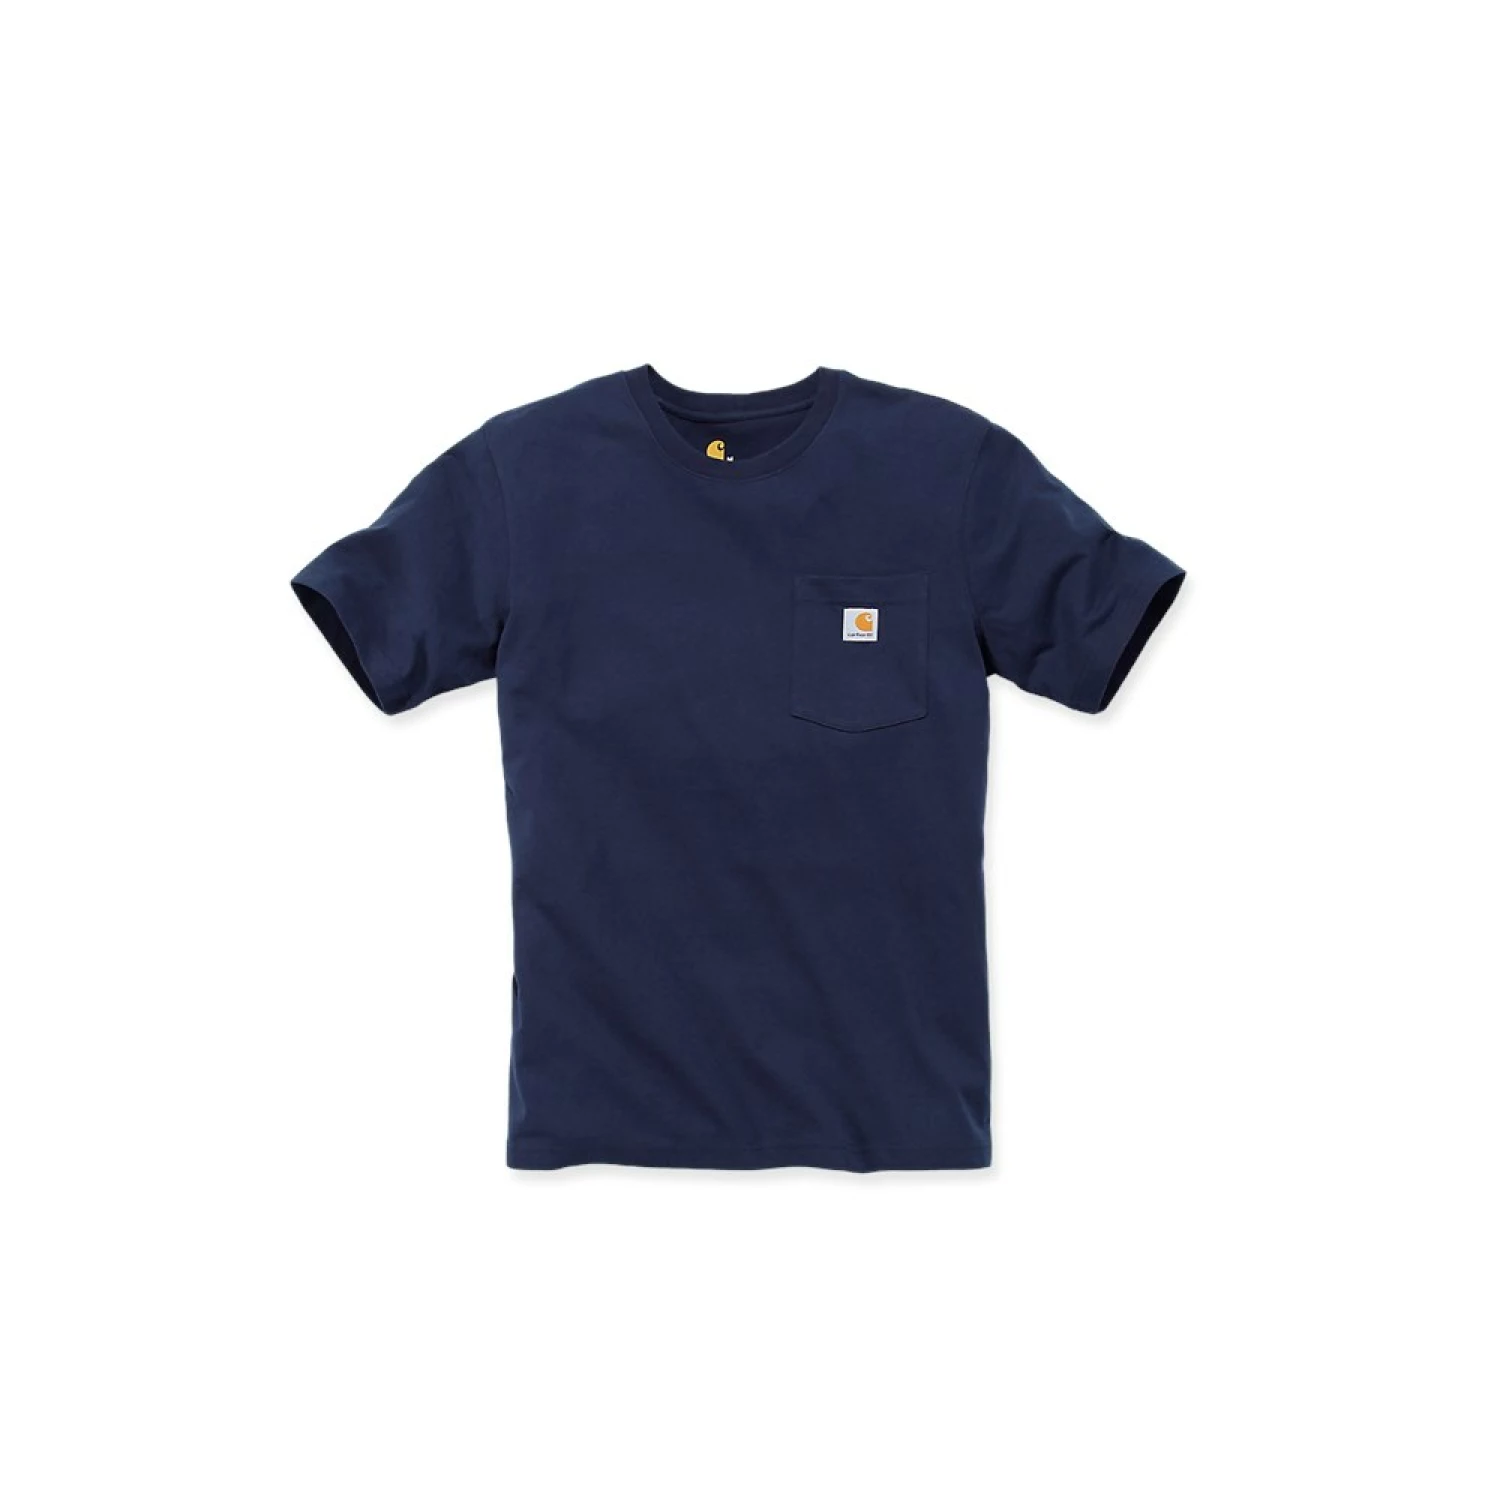 Carhartt 103296 Workwear Pocket T-Shirt - Relaxed Fit - Navy - XL